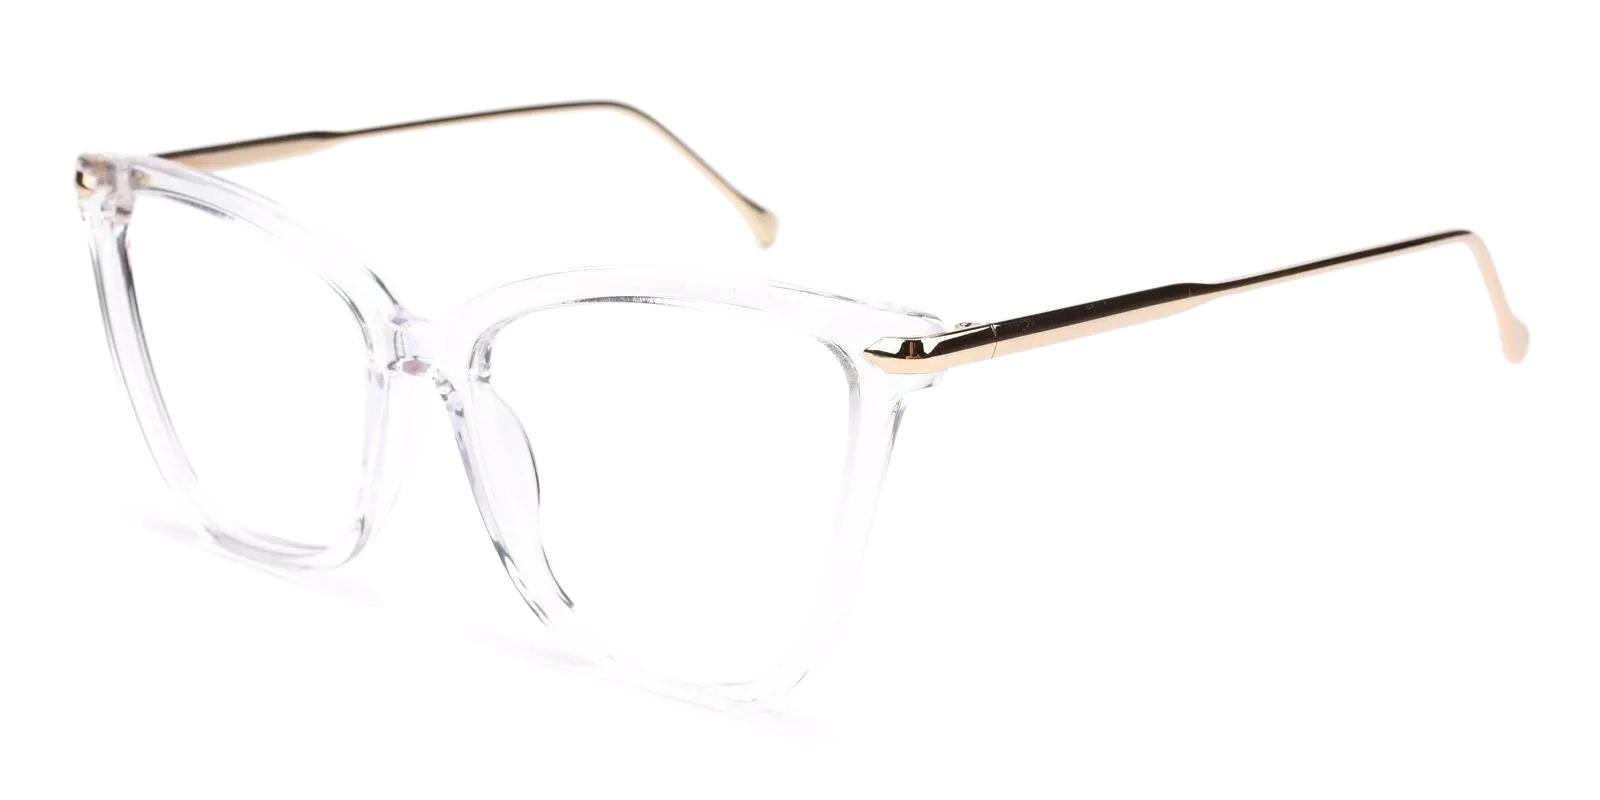 Gosse Translucent Metal , Acetate UniversalBridgeFit , Fashion , Eyeglasses Frames from ABBE Glasses